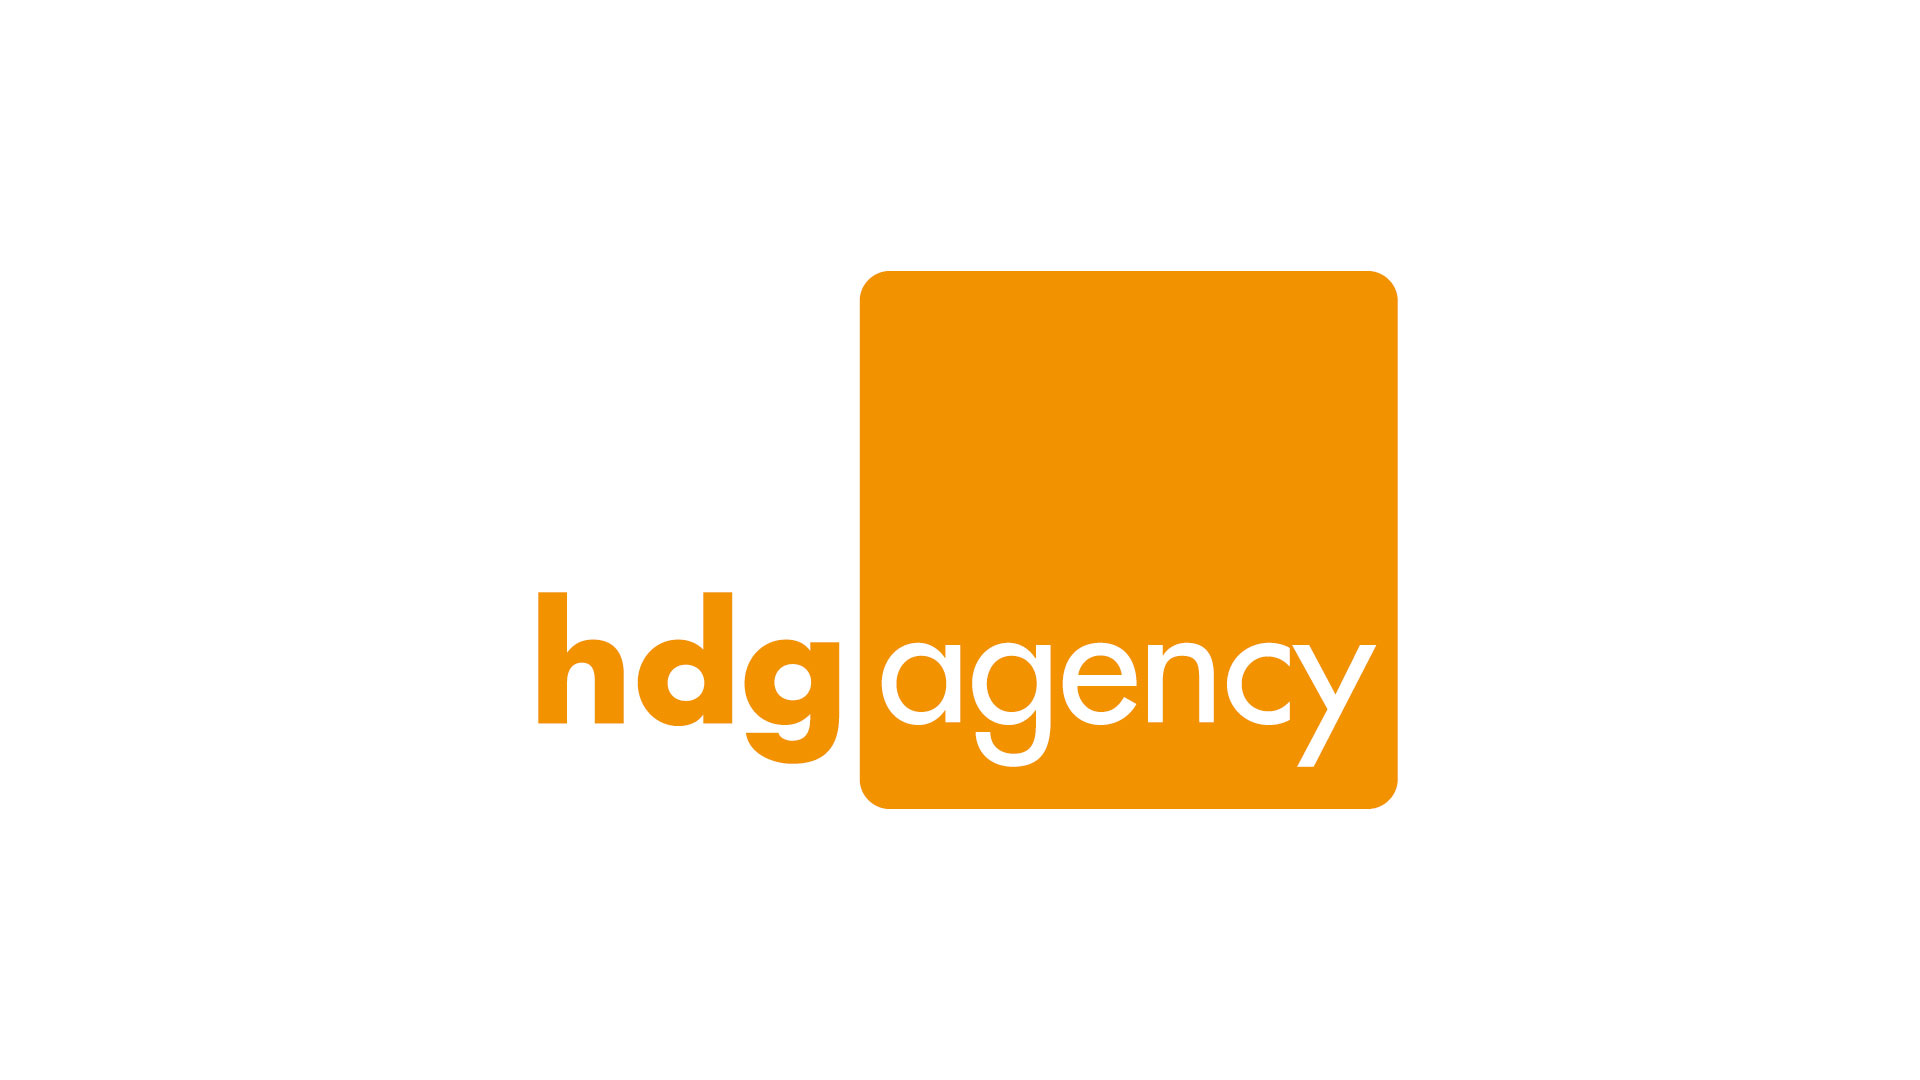 Hdg Agency